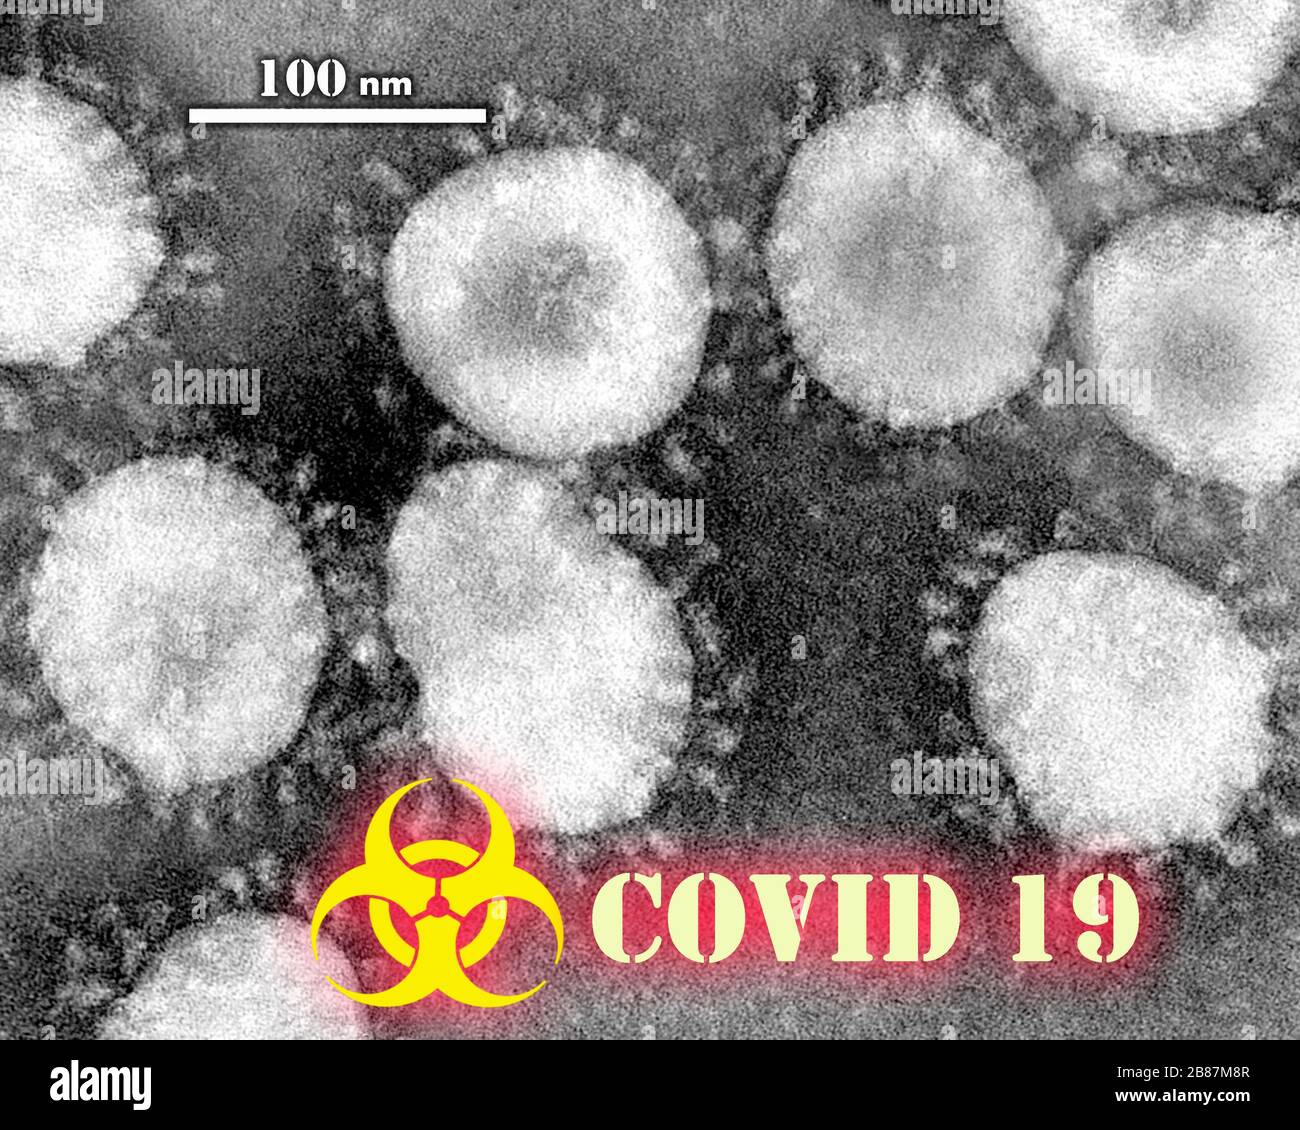 Coronavirus - COVID-19. Severe acute respiratory syndrome coronavirus 2 (SARS-CoV-2), previously known by the provisional name 2019 novel coronavirus Stock Photo